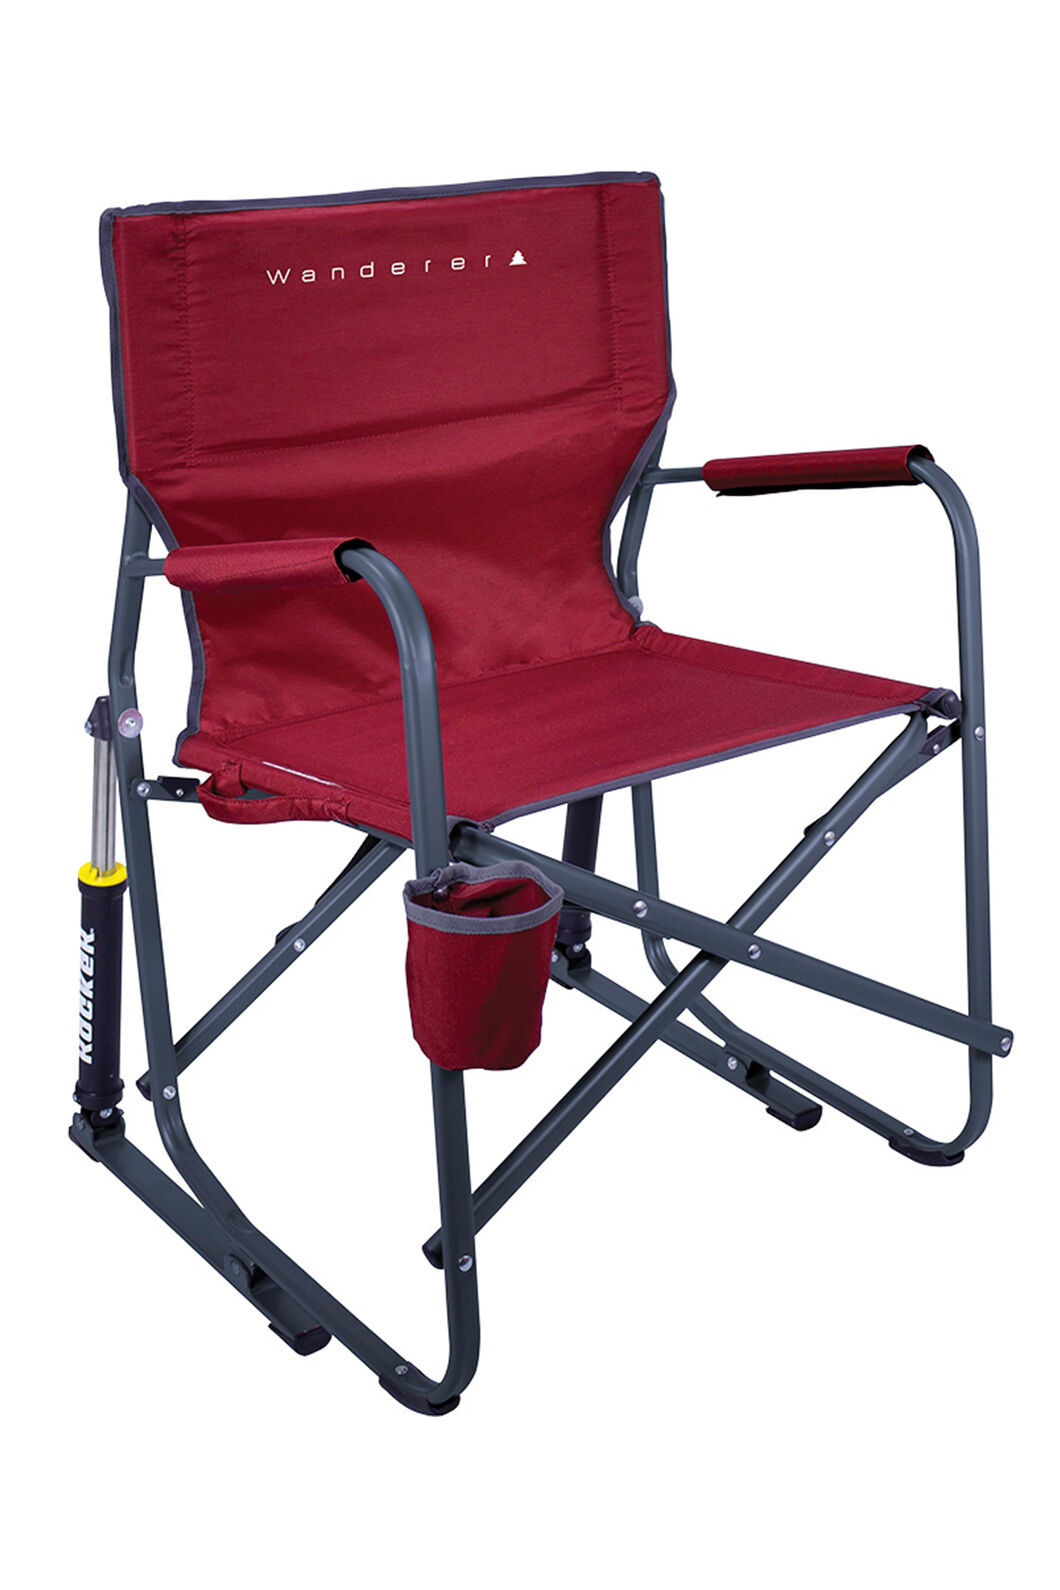 Wanderer Freestyle Rocker Camp Chair Macpac